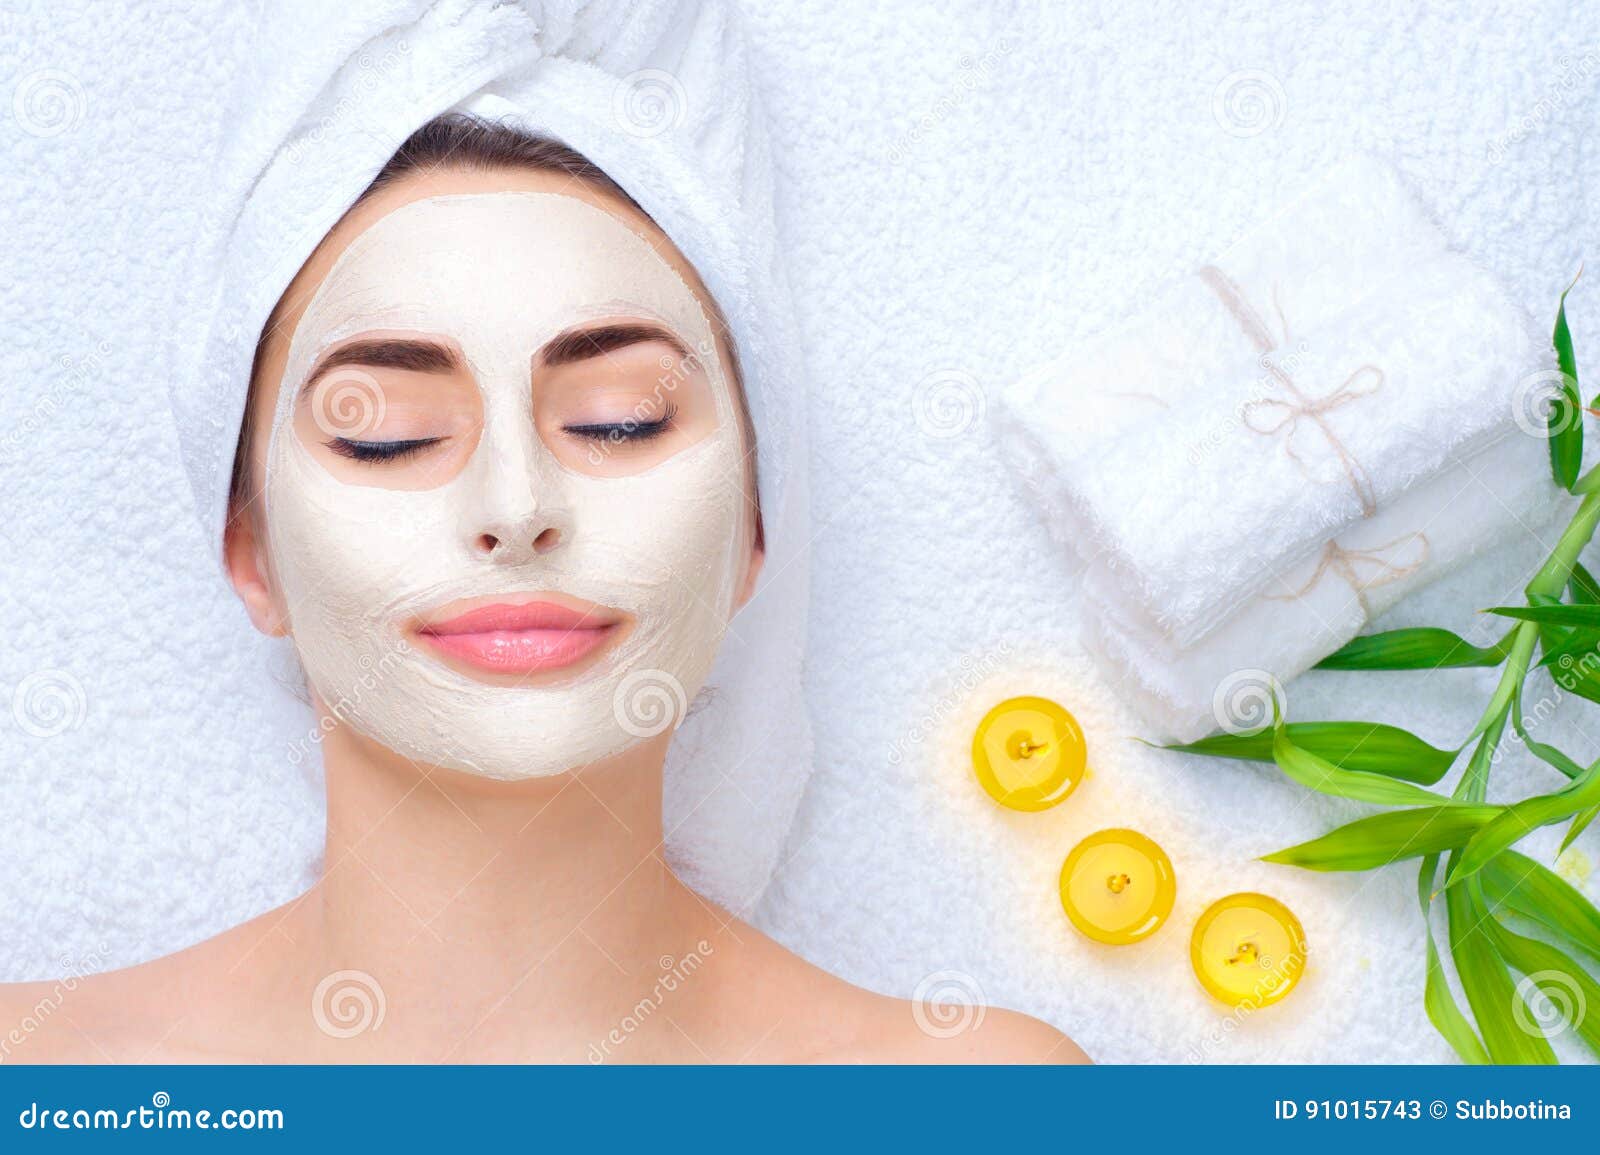 spa woman applying facial mask